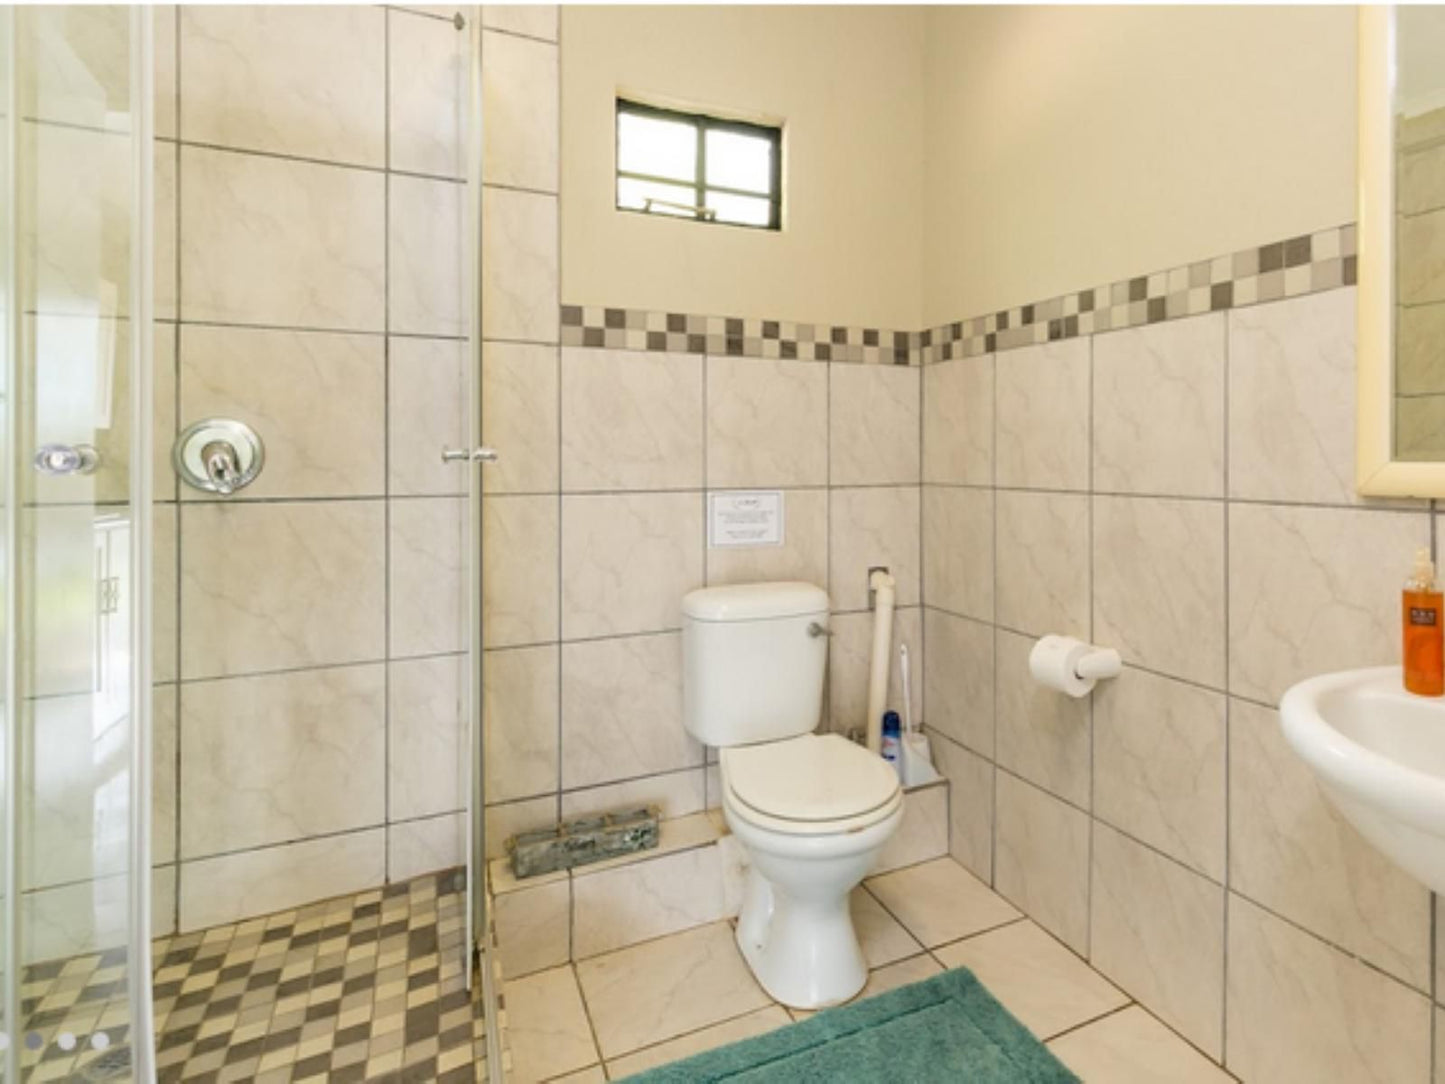 La Bastide Skeerpoort Hartbeespoort North West Province South Africa Sepia Tones, Bathroom